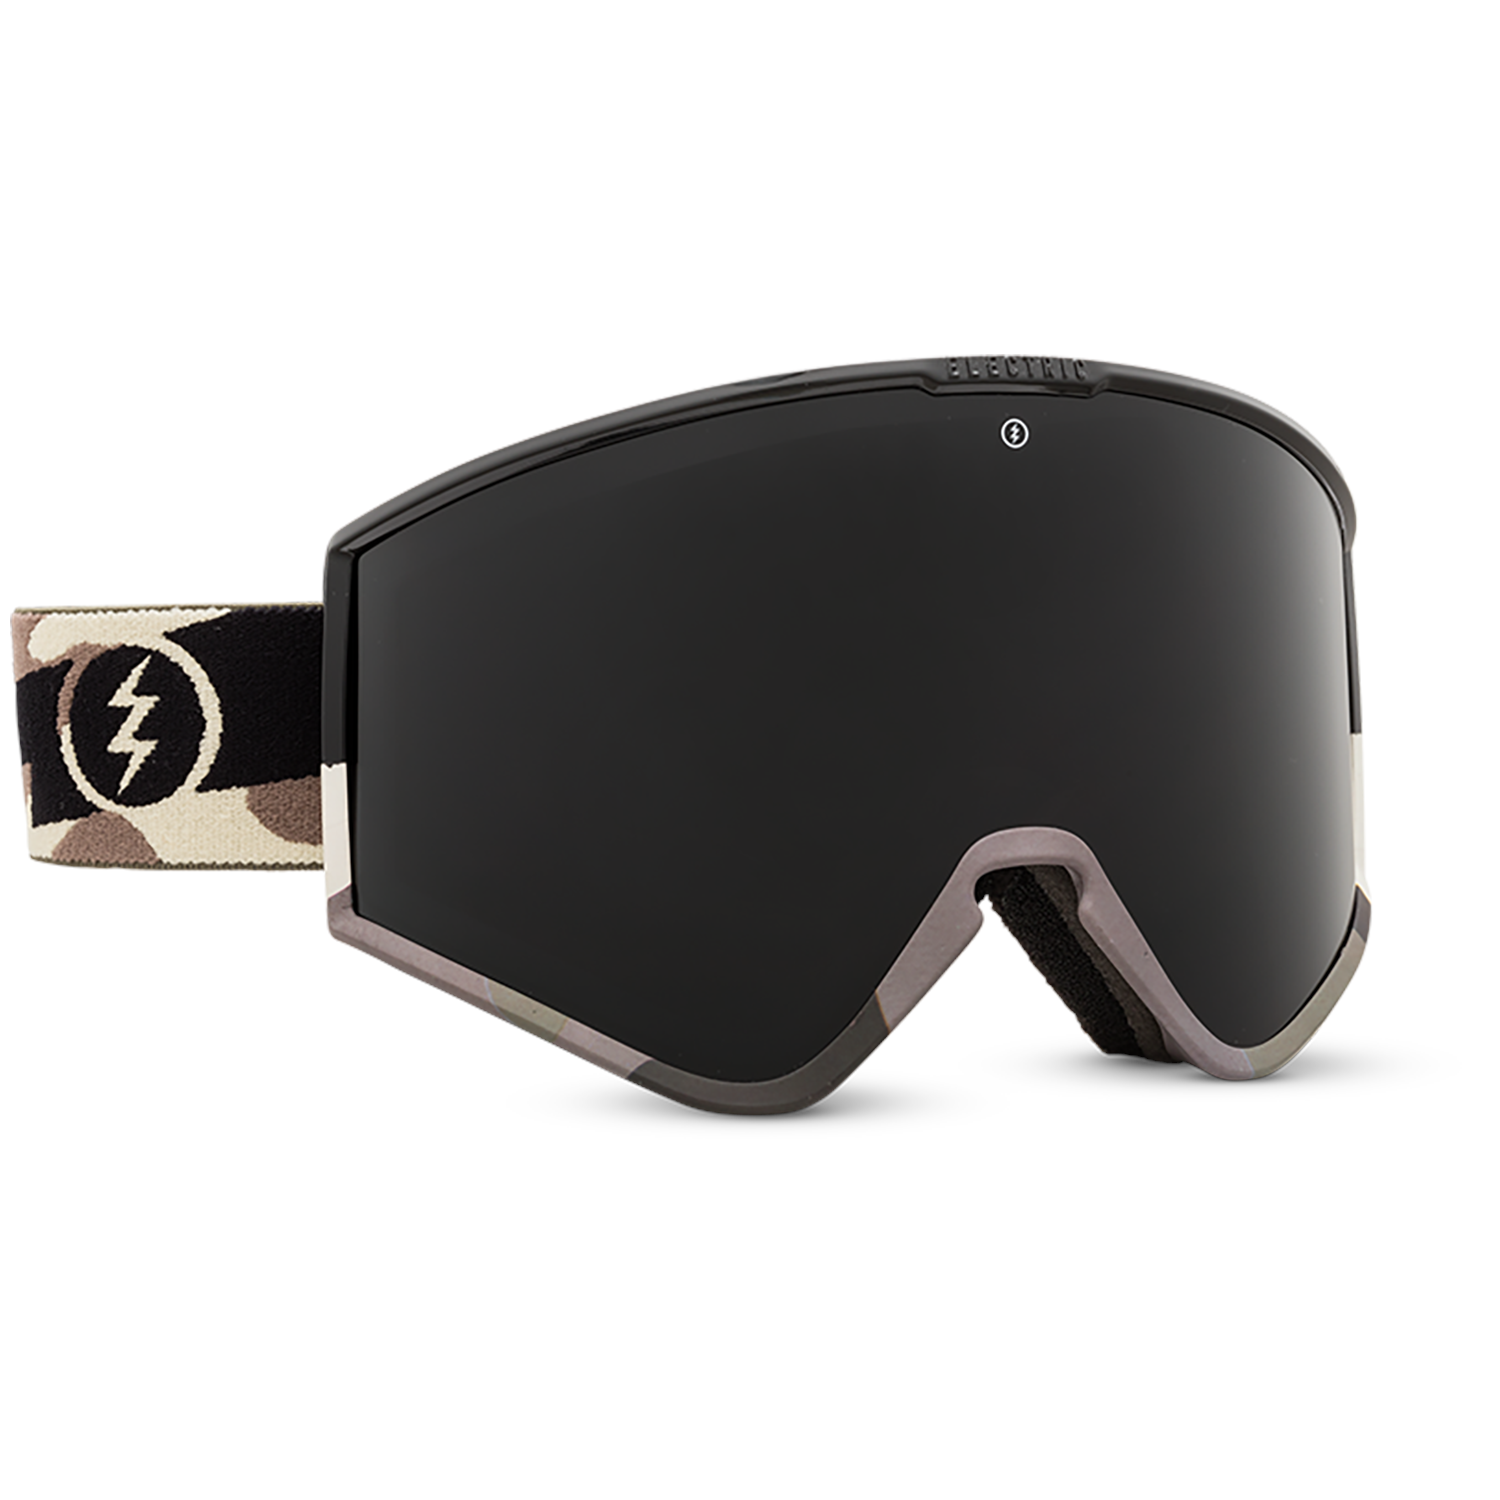 Electric Kleveland Matte White 2020 Snowboard Goggles Brose Pink Chrome Lens 